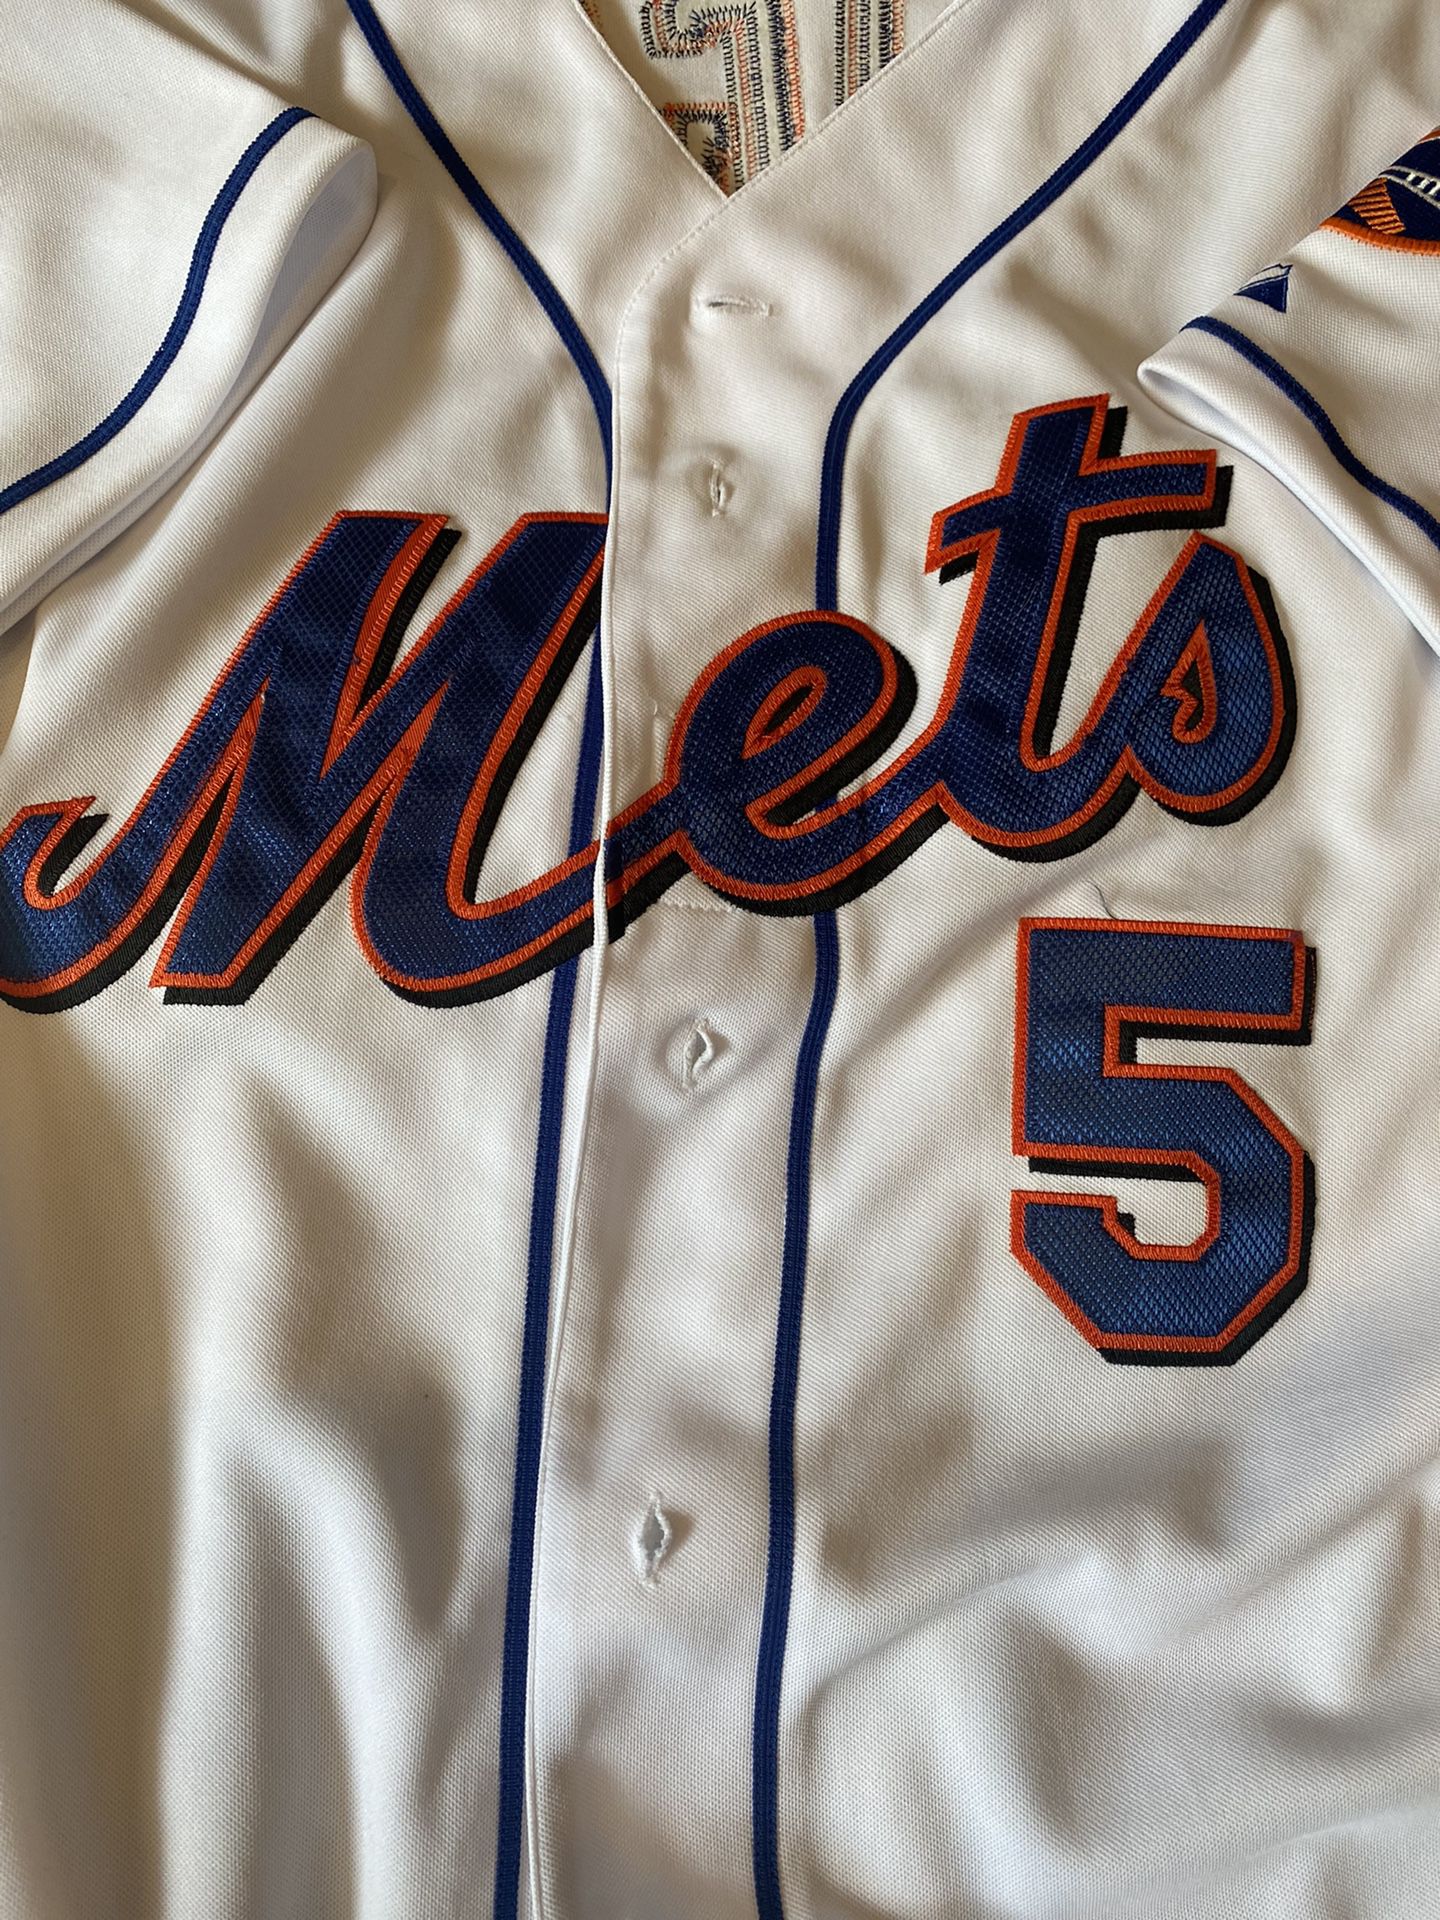 2006 David Wright New York Mets Majestic Authentic MLB Jersey Size 52 XXL –  Rare VNTG